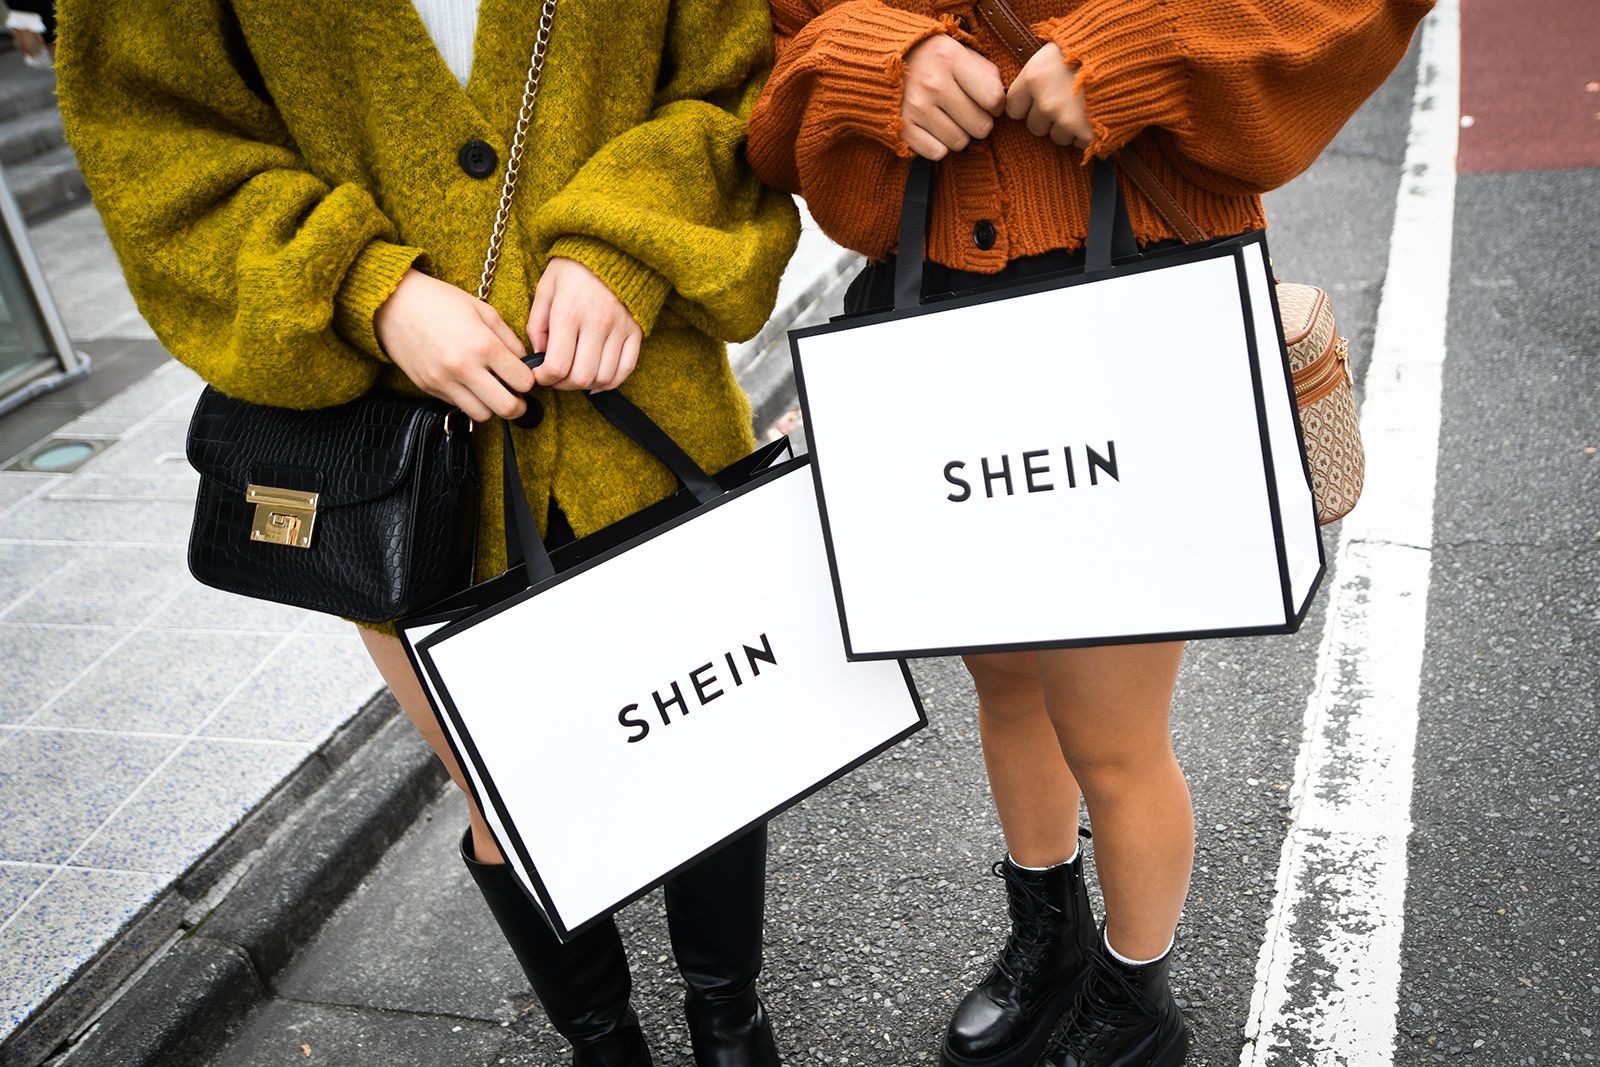 Online retailer Shein hosts pop-up shop at the Empire Mall